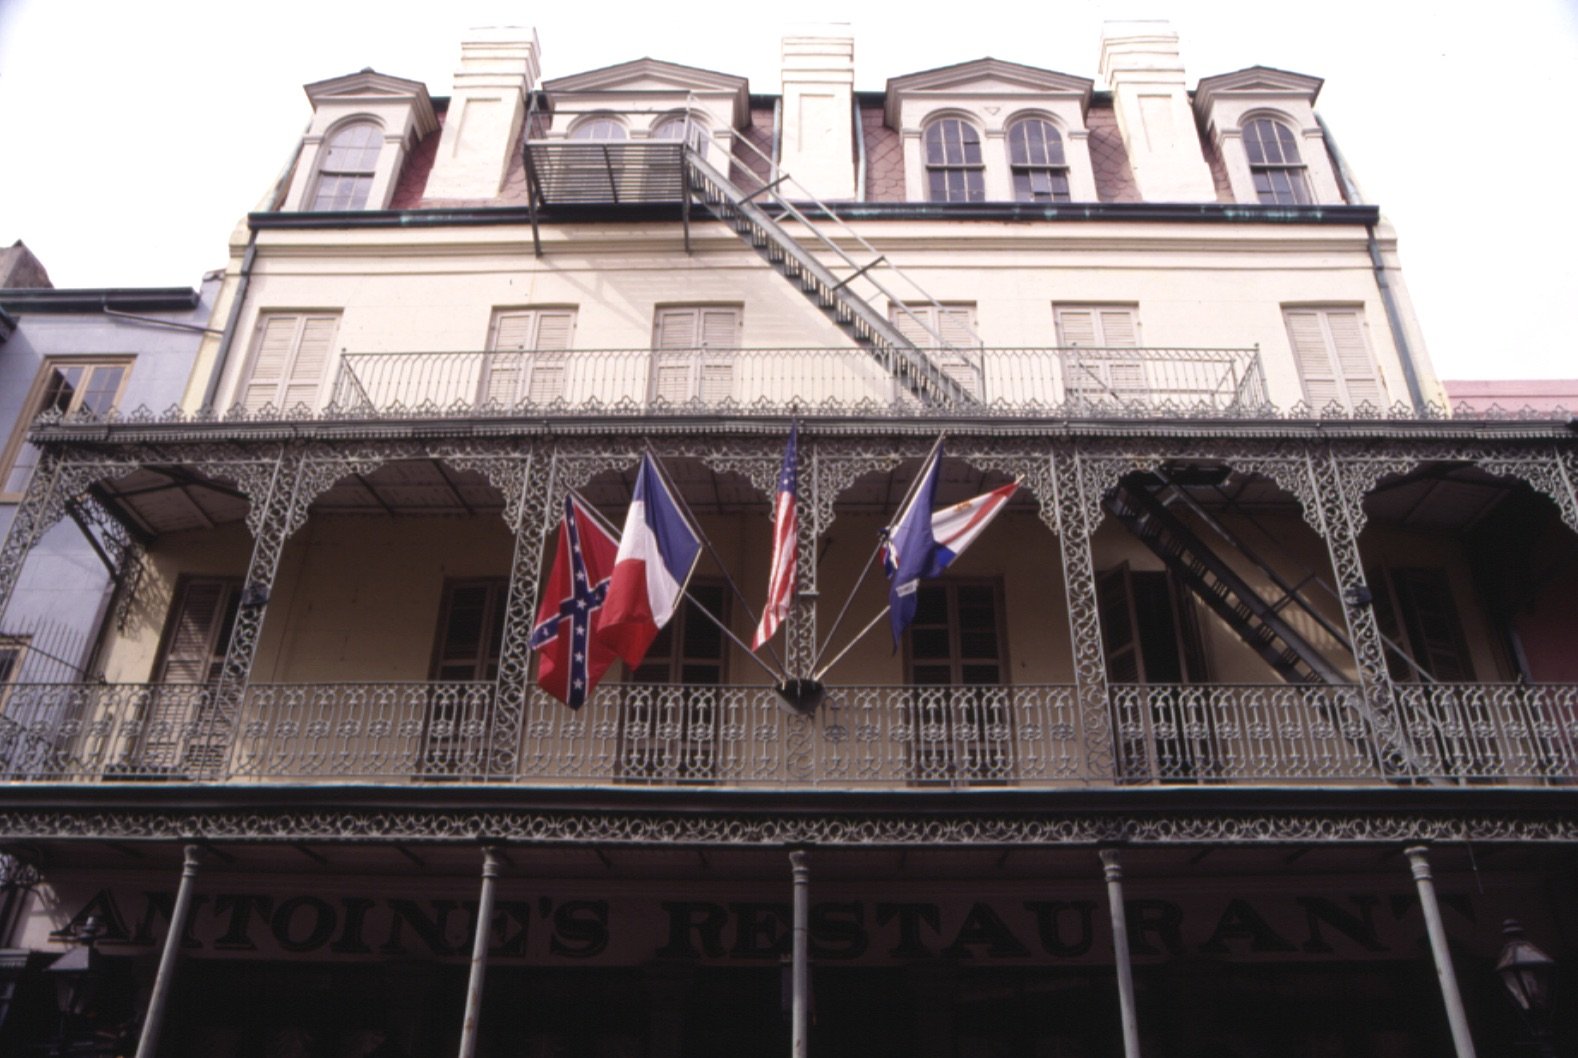 New Orleans recupera los niveles de turismo pre huracán Katrina